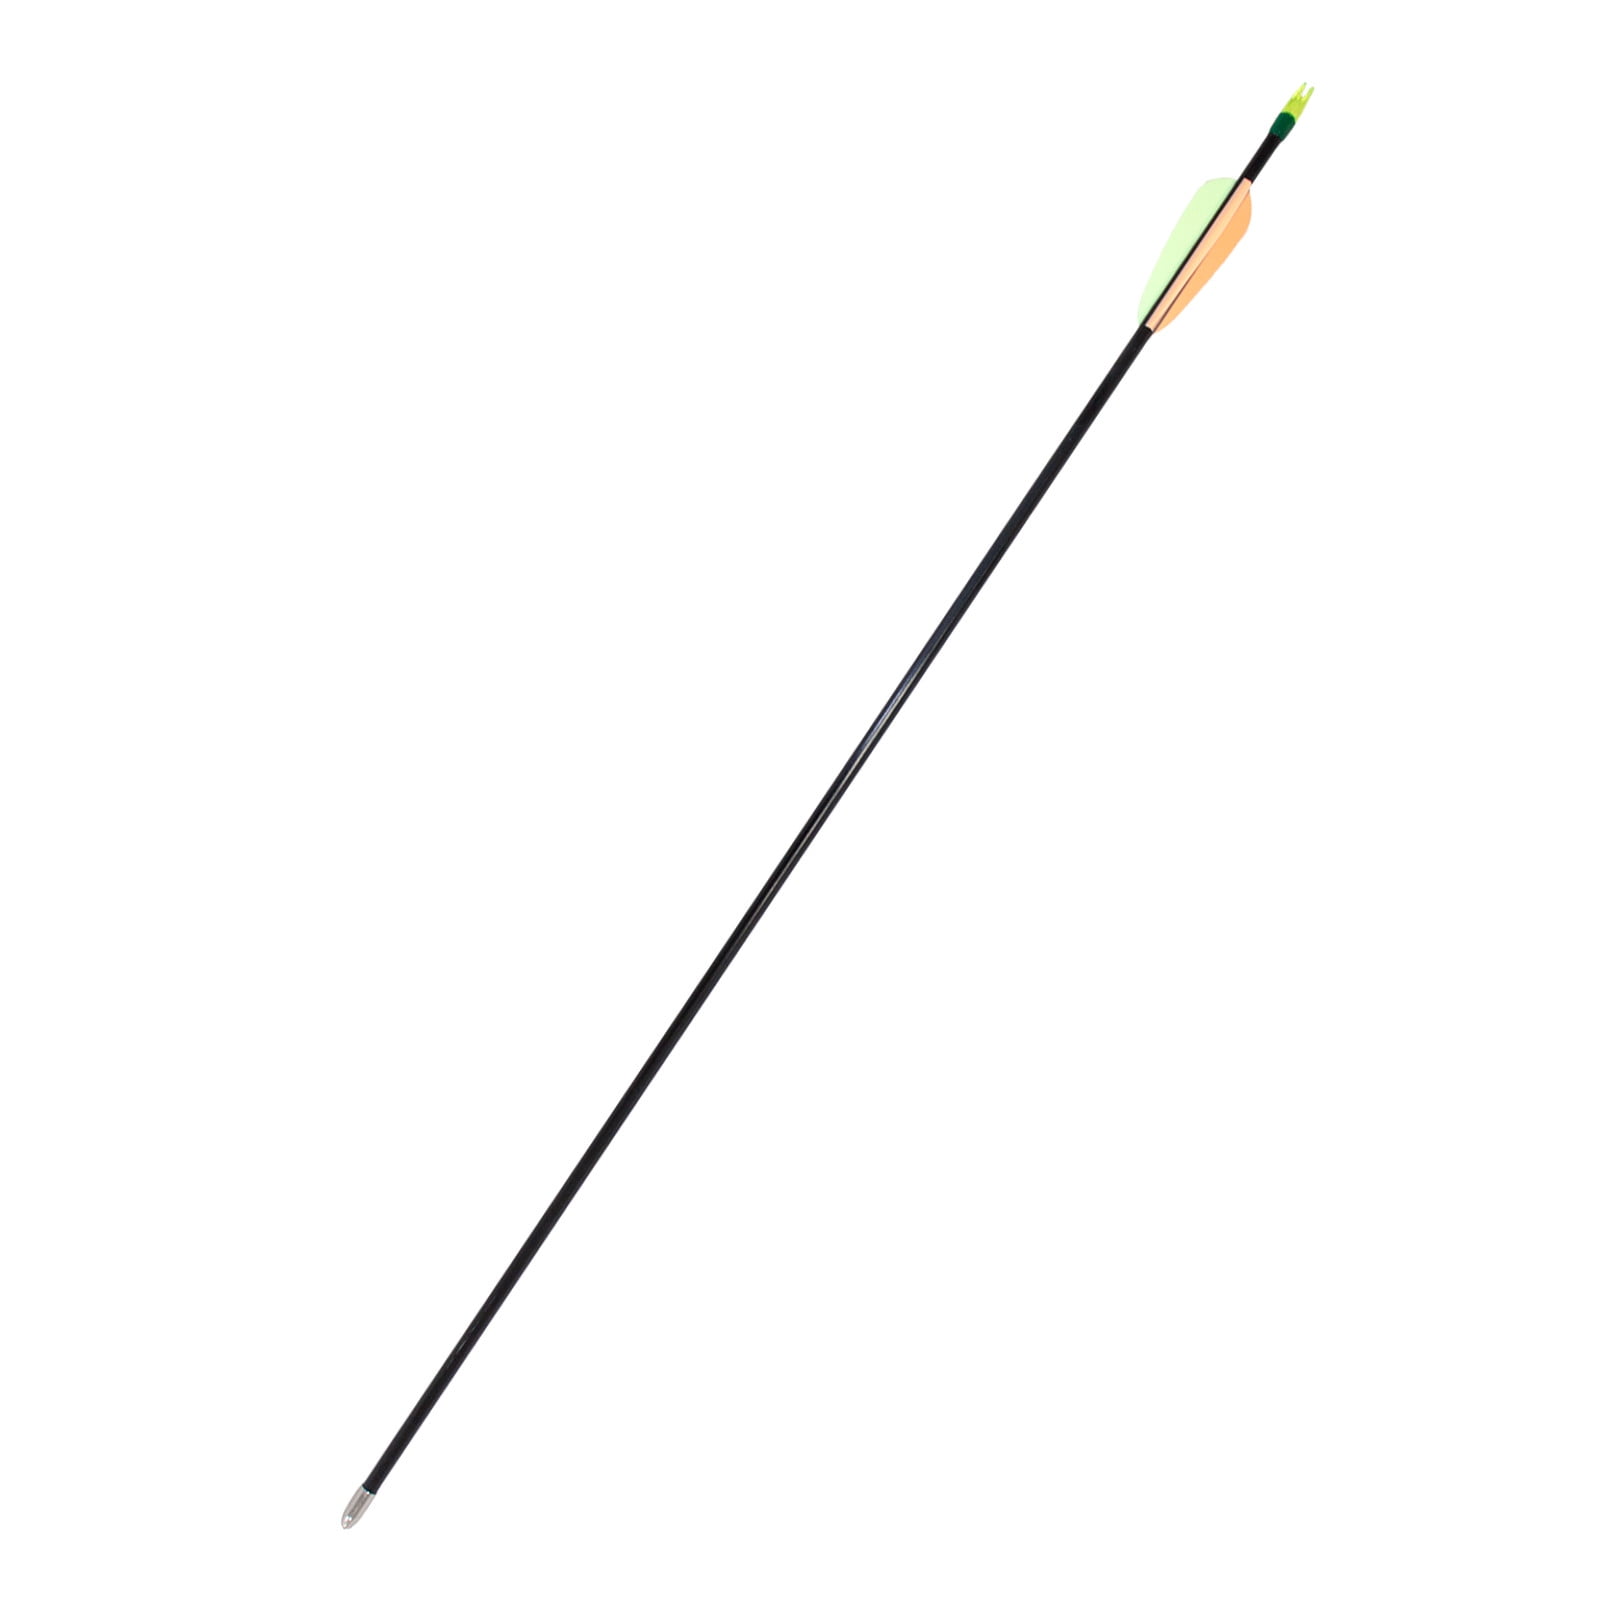 ZSHJGJR 12 Pieces 30 Inch Fiberglass Arrow Archery Practice Target Arrows 6mm Fun Game Arrows with Arrow Quiver for Beginner Recurve Compound Bow 